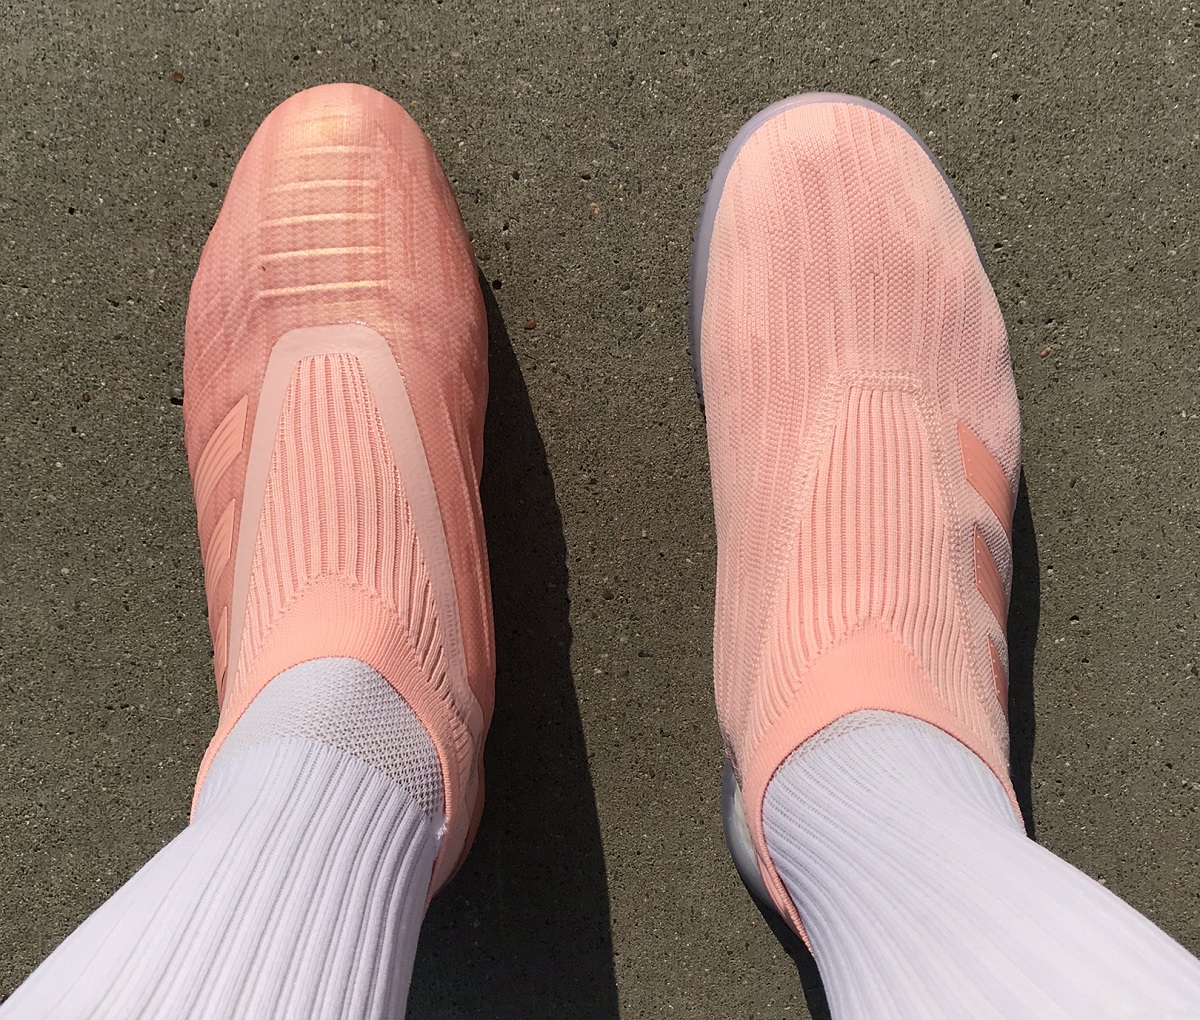 adidas predator tango pink